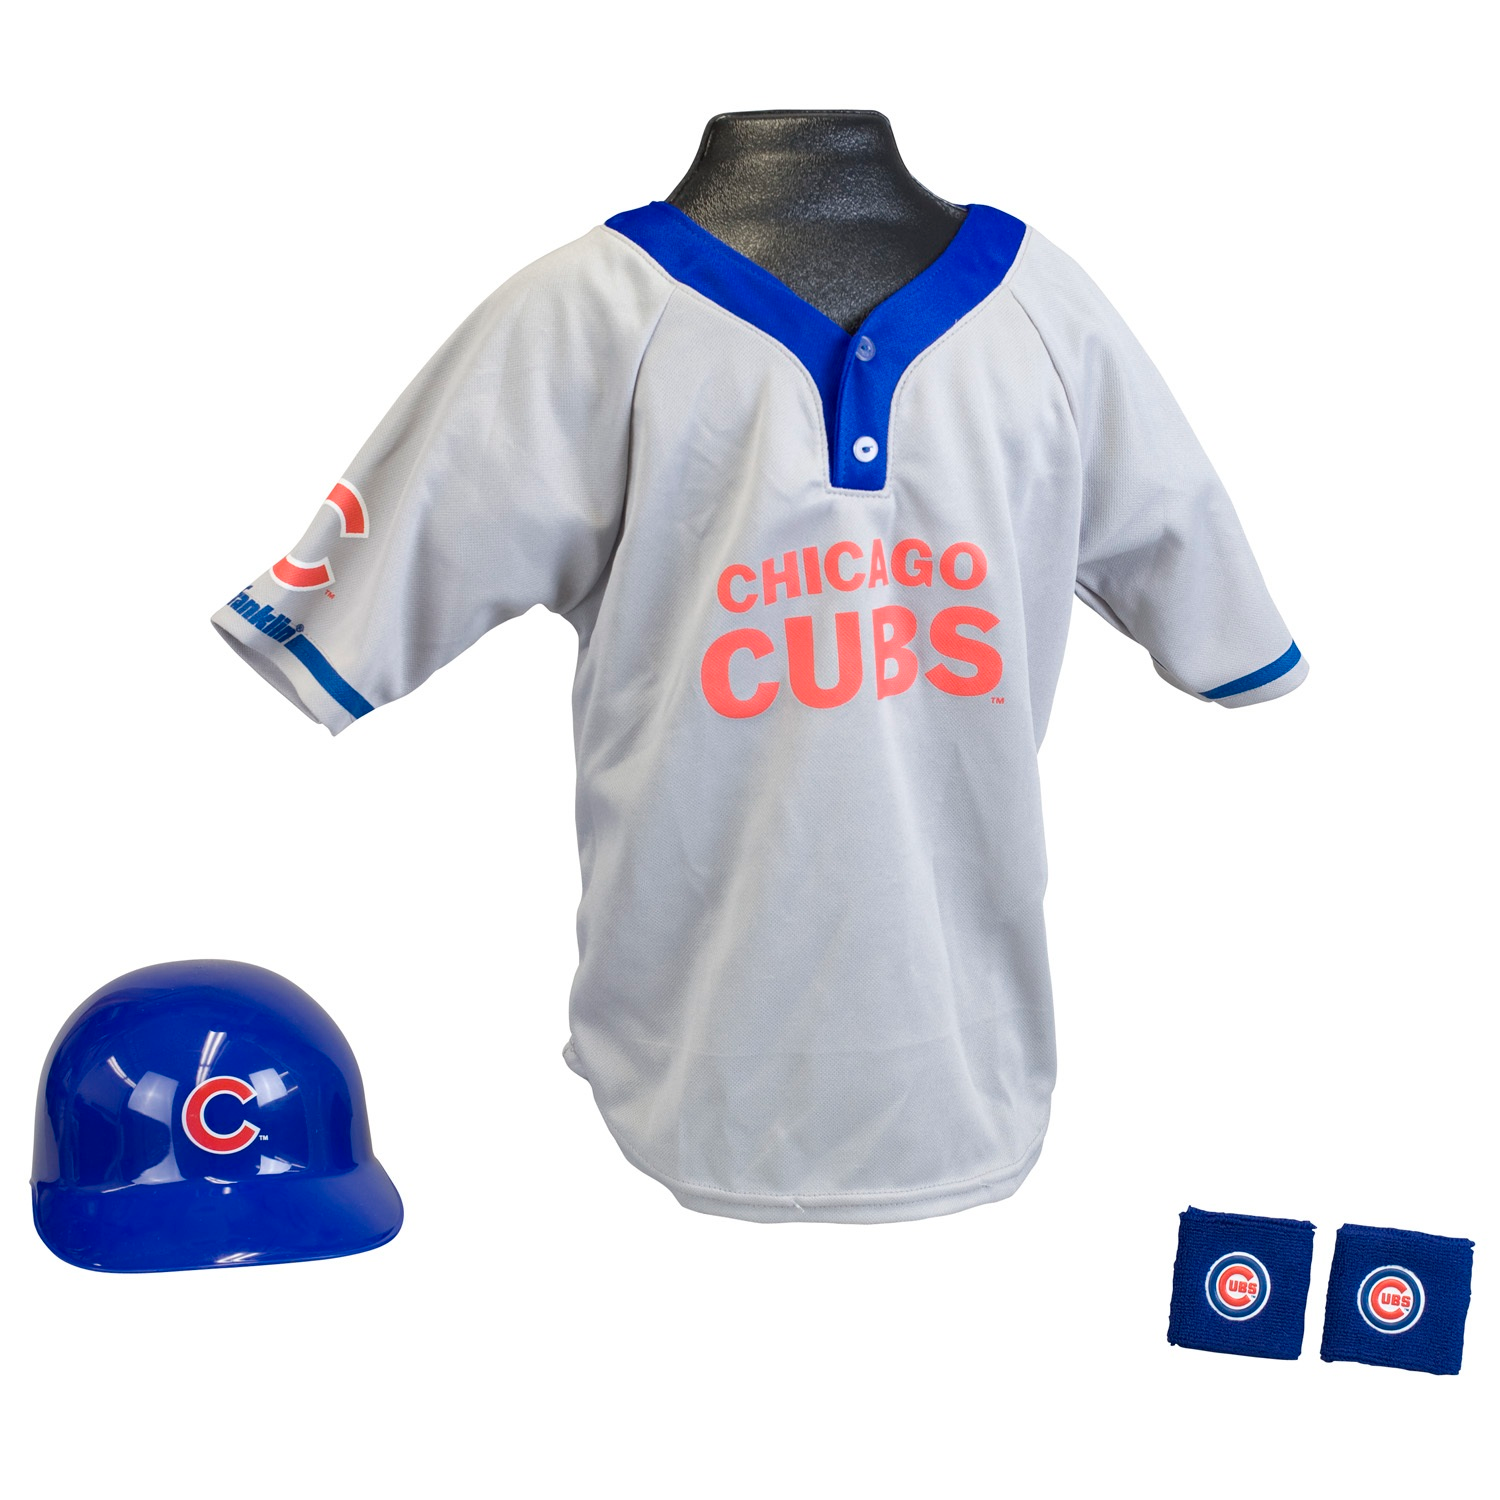 Chicago Cubs MLB Youth Uniform Set Halloween Costume